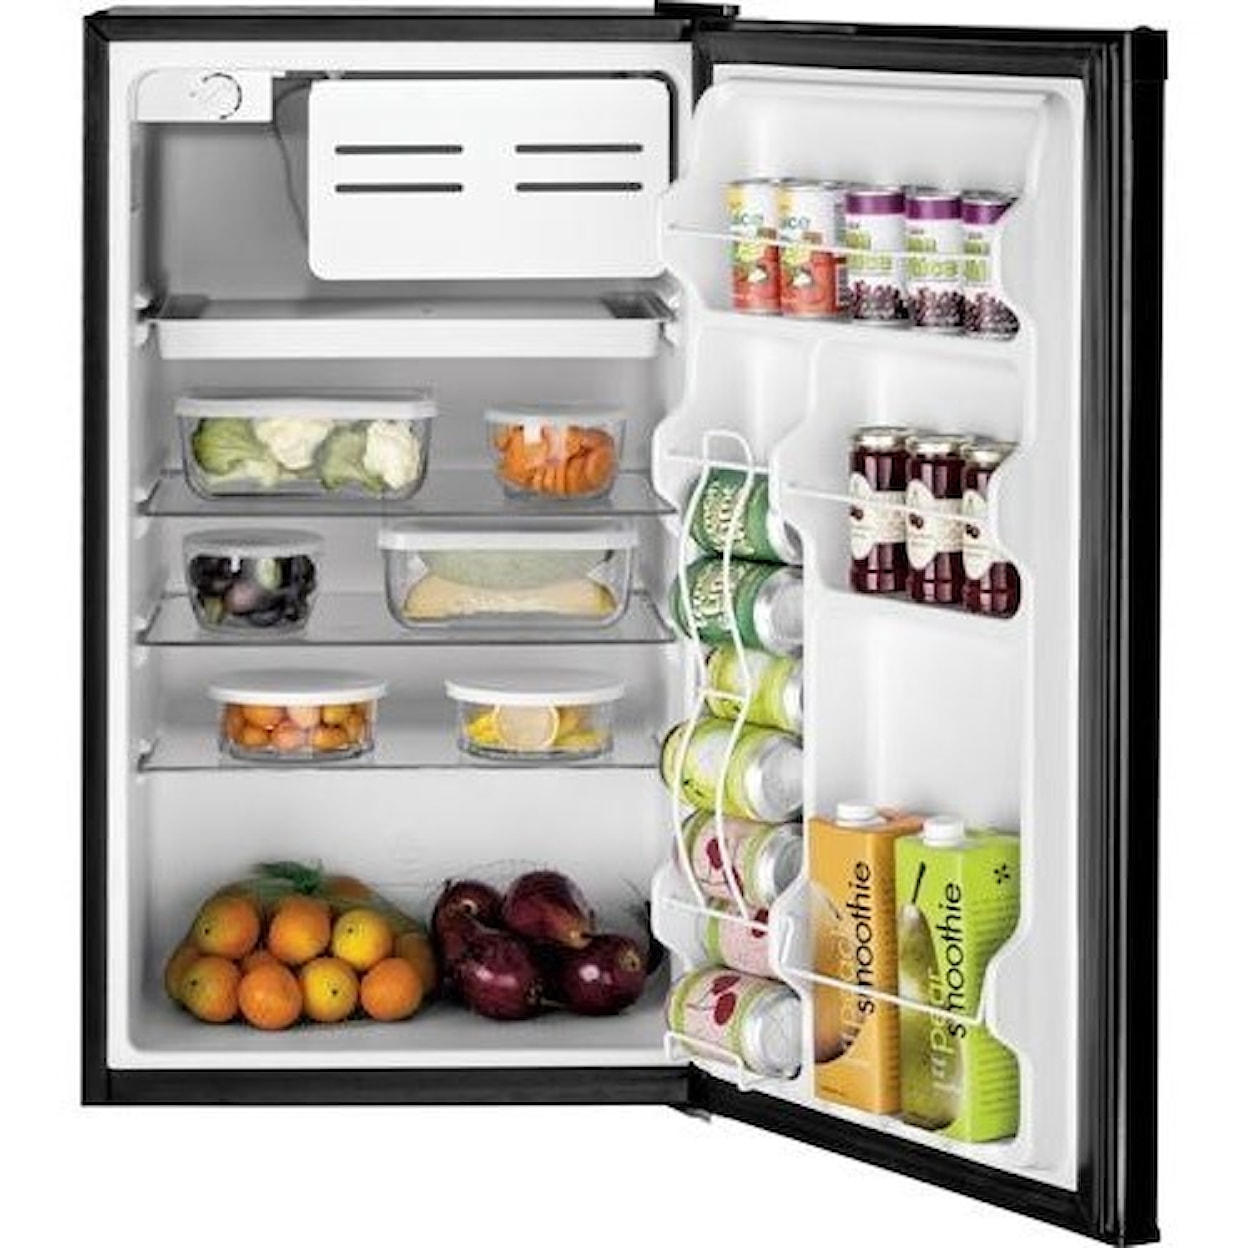 GE Appliances Compact Refrigerators GE® Compact Refrigerator